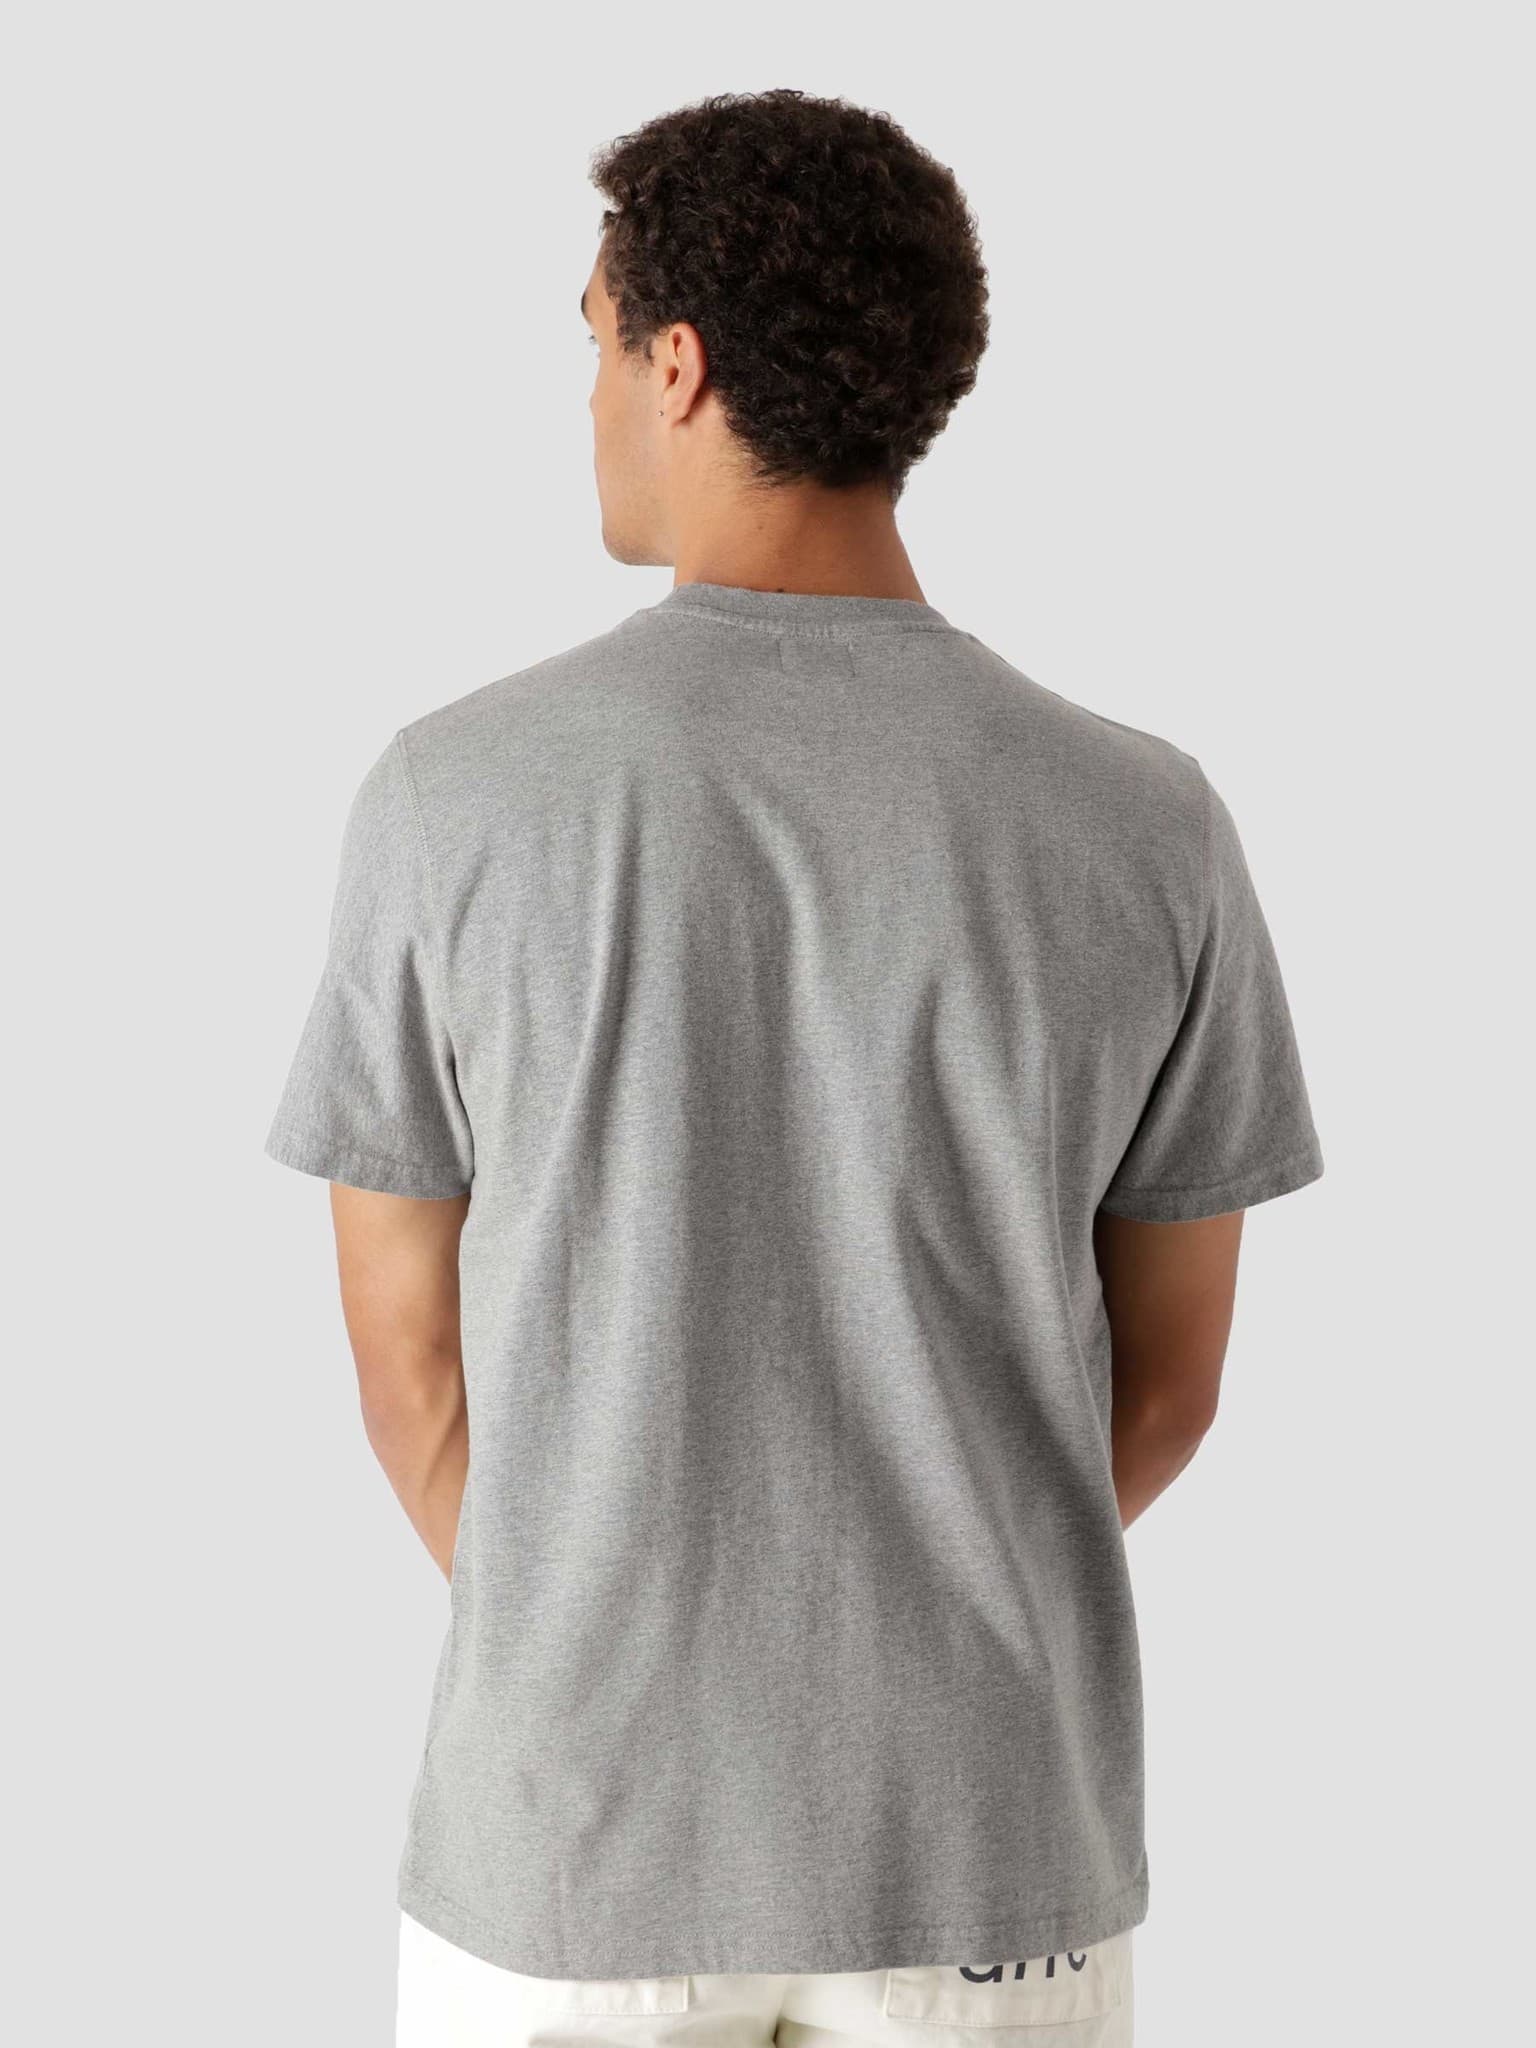 Tissot Logo T-Shirt Grey AW21-062T